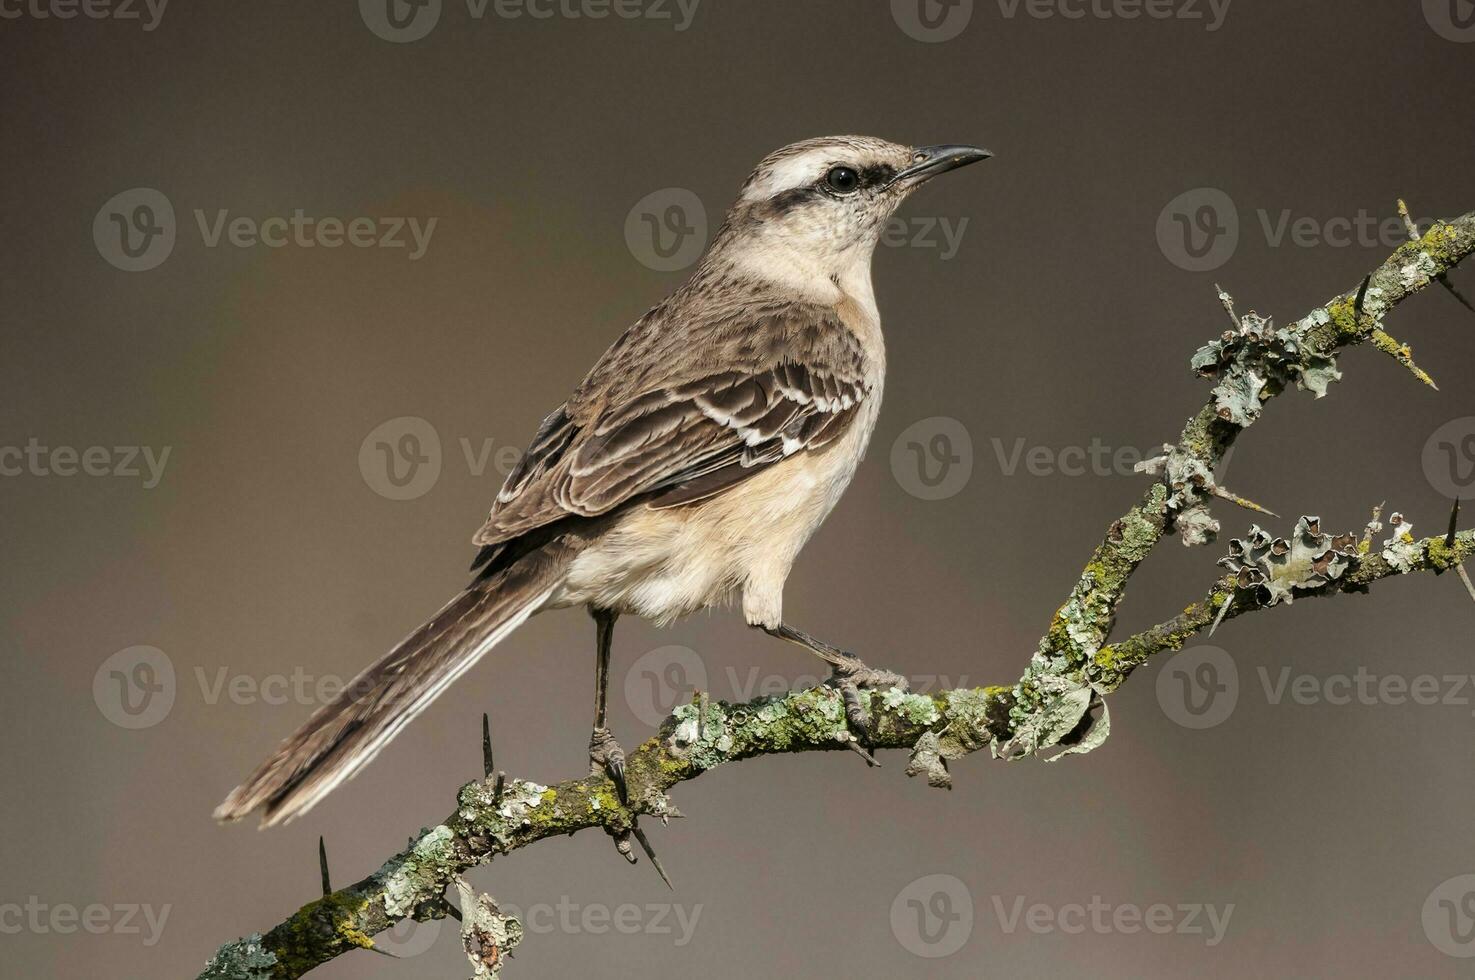 krita brynt härmfågel, la pampa provins, patagonien, argentina foto